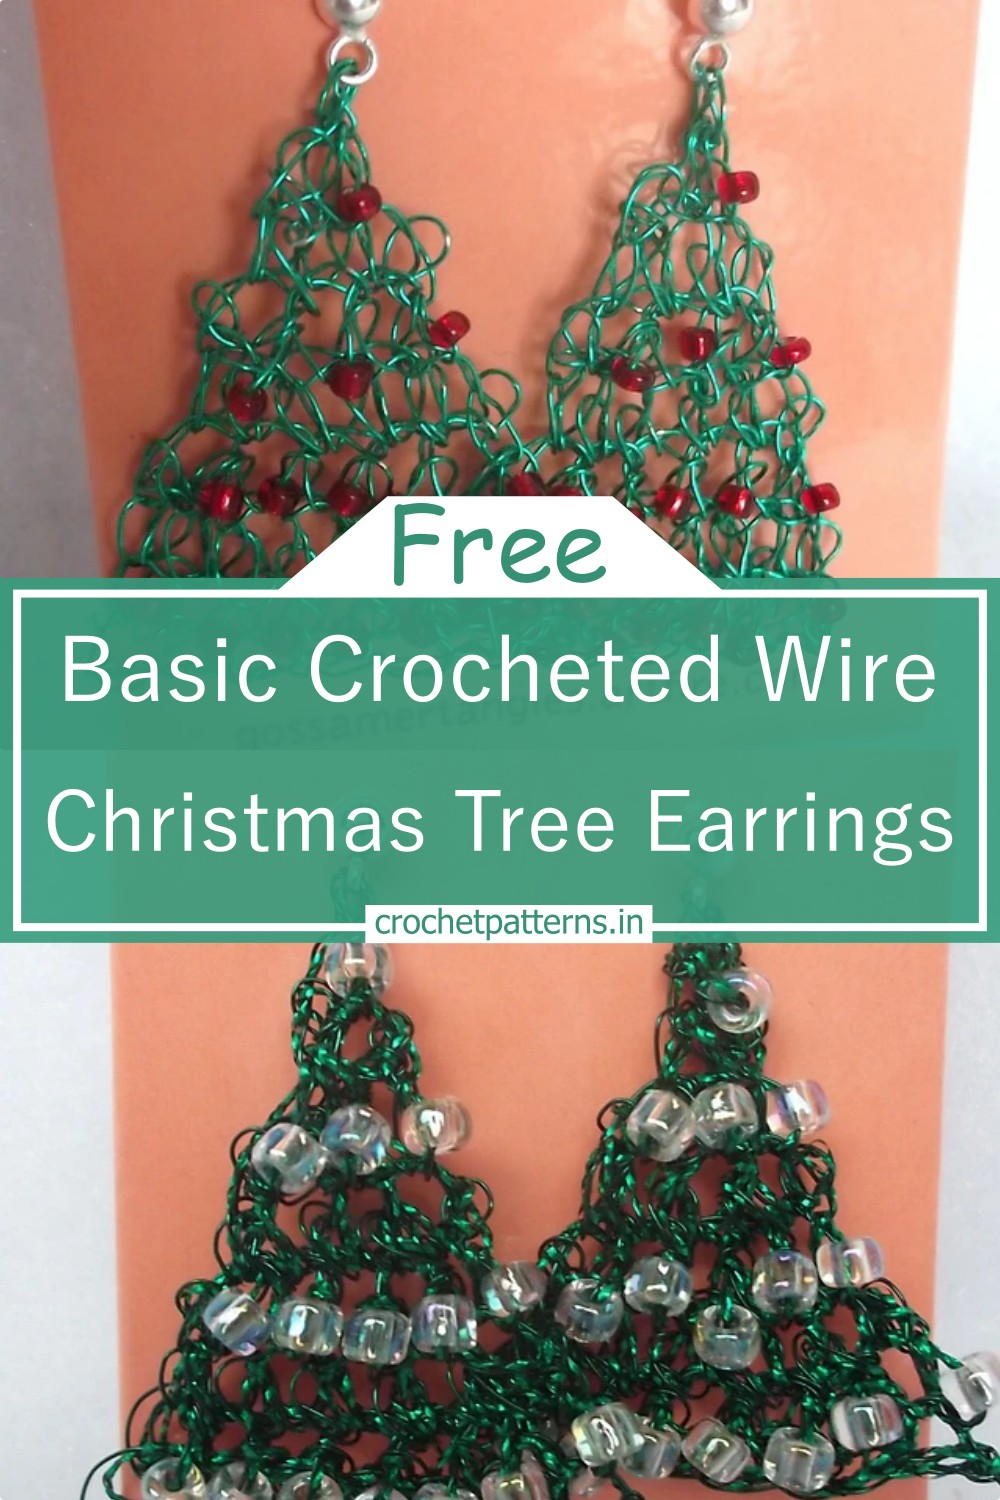 Basic Crocheted Wire Christmas Tree Earrings